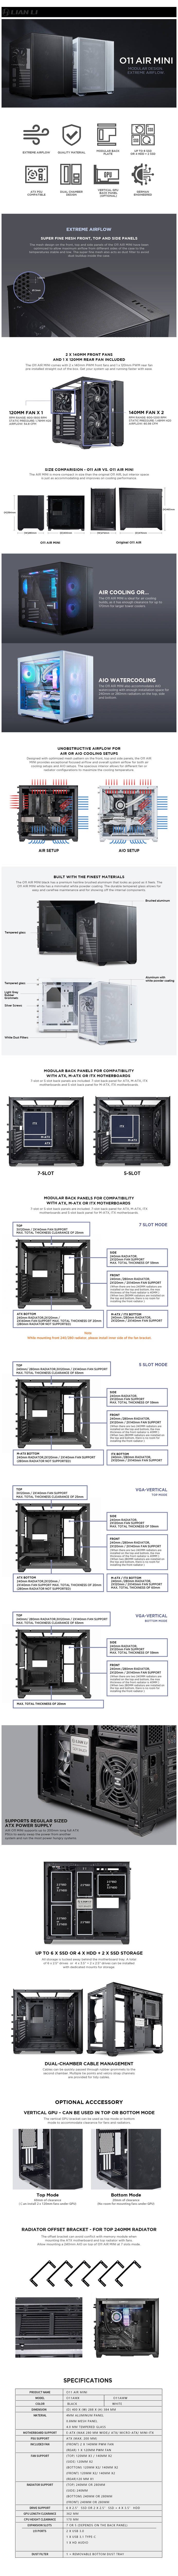 Lian Li O11 Air Mini Mesh & Tempered Glass E-ATX Case - White - Overview 1